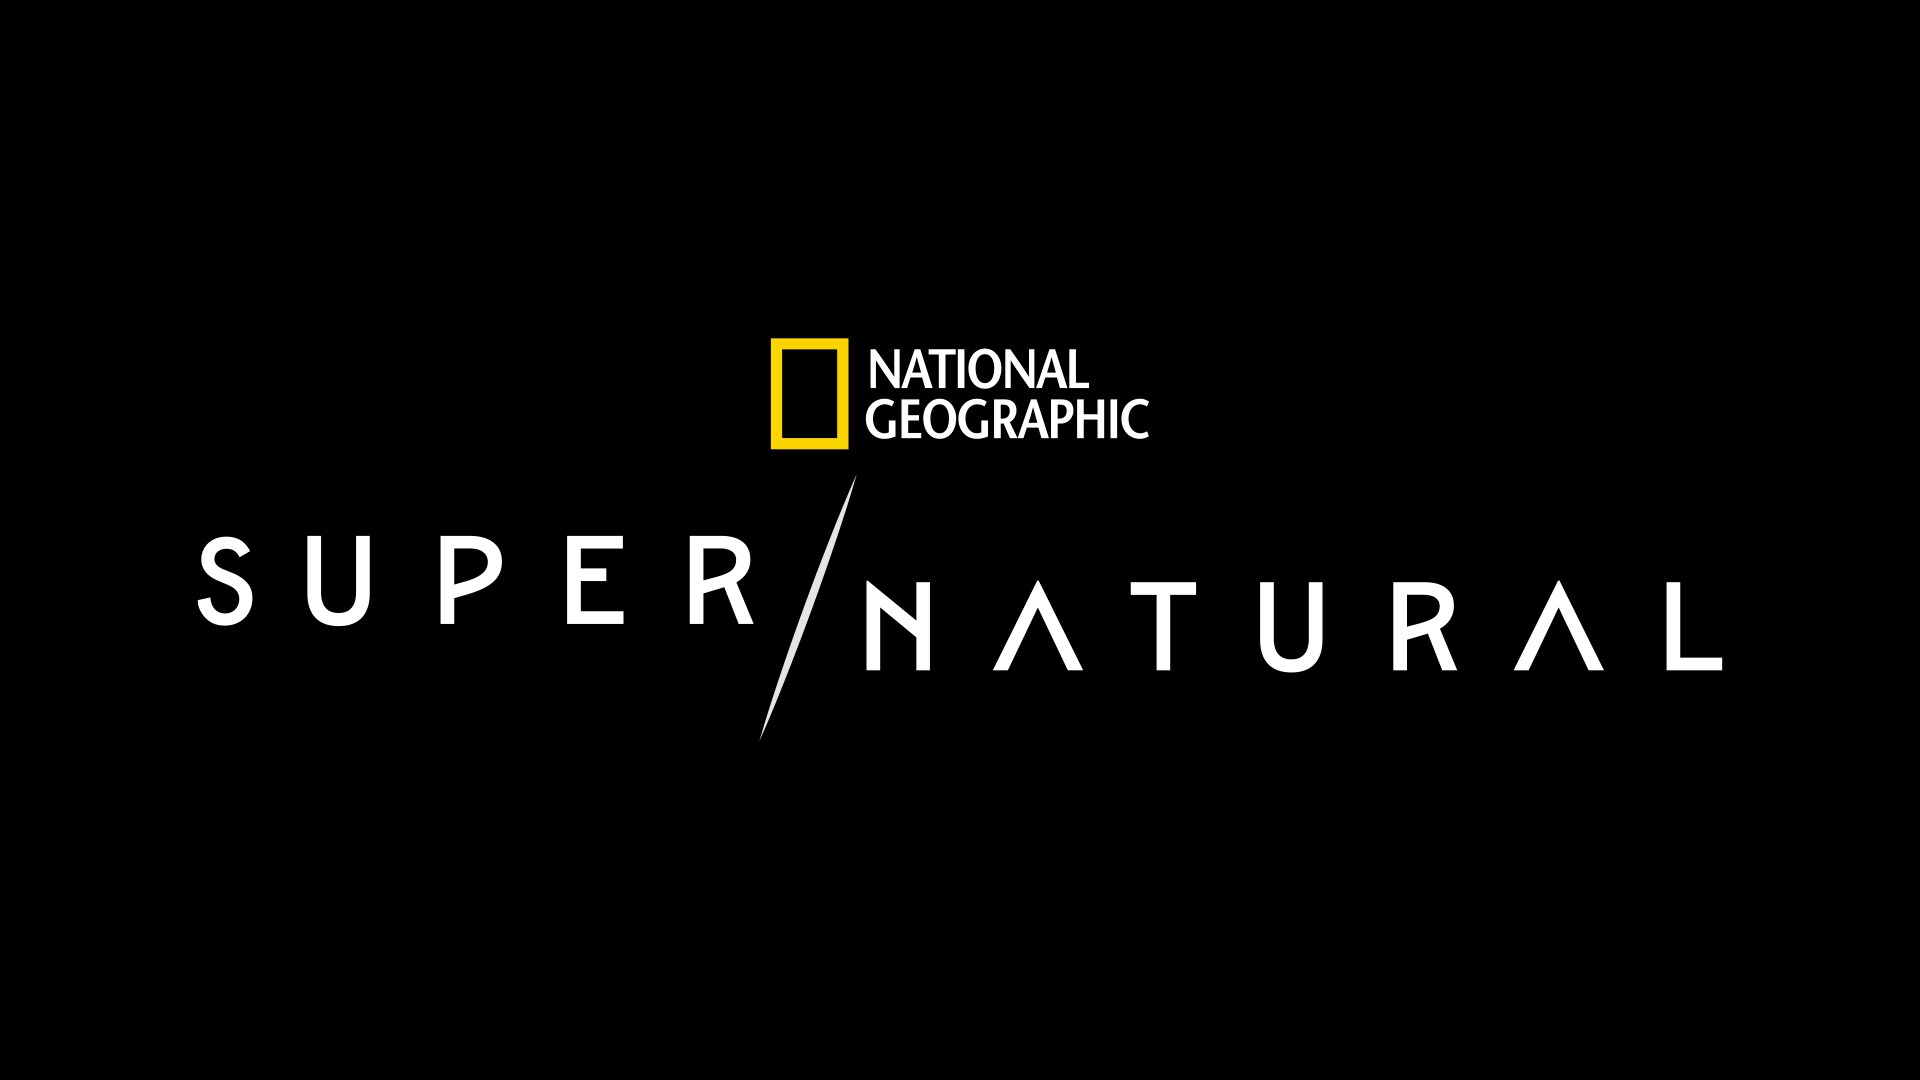 Super/Natural Logo - Black